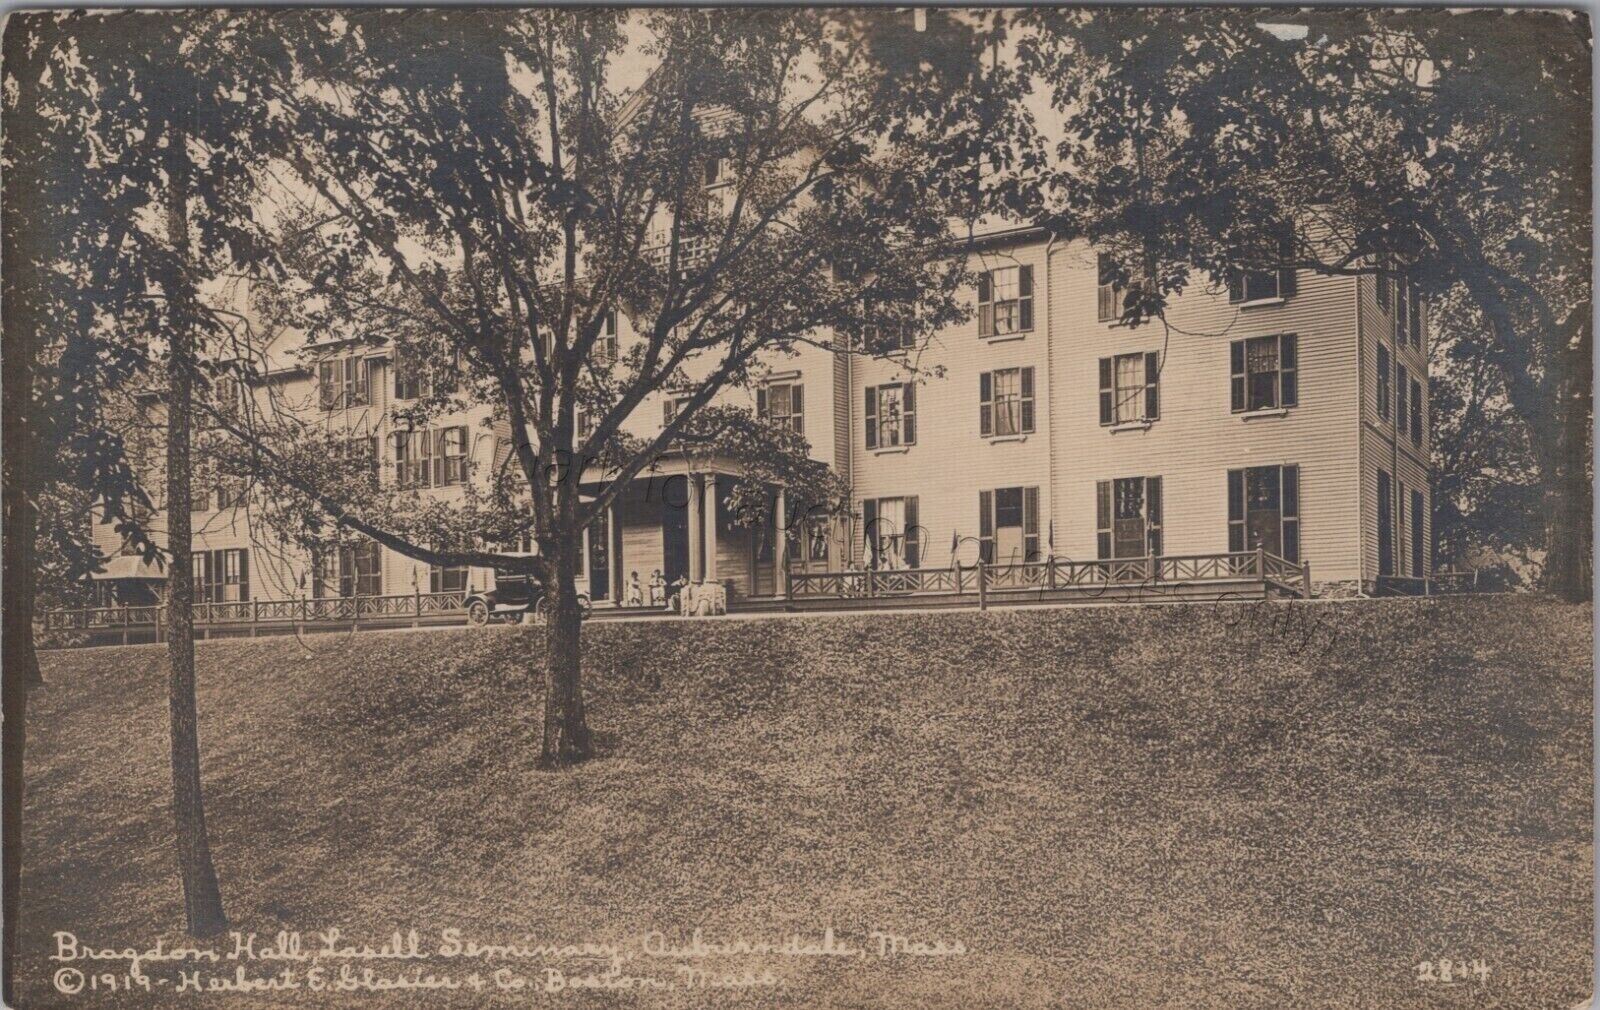 Auburndale, MA: RPPC, Bragdon Hall, Lasell Seminary Massachusetts Photo Postcard